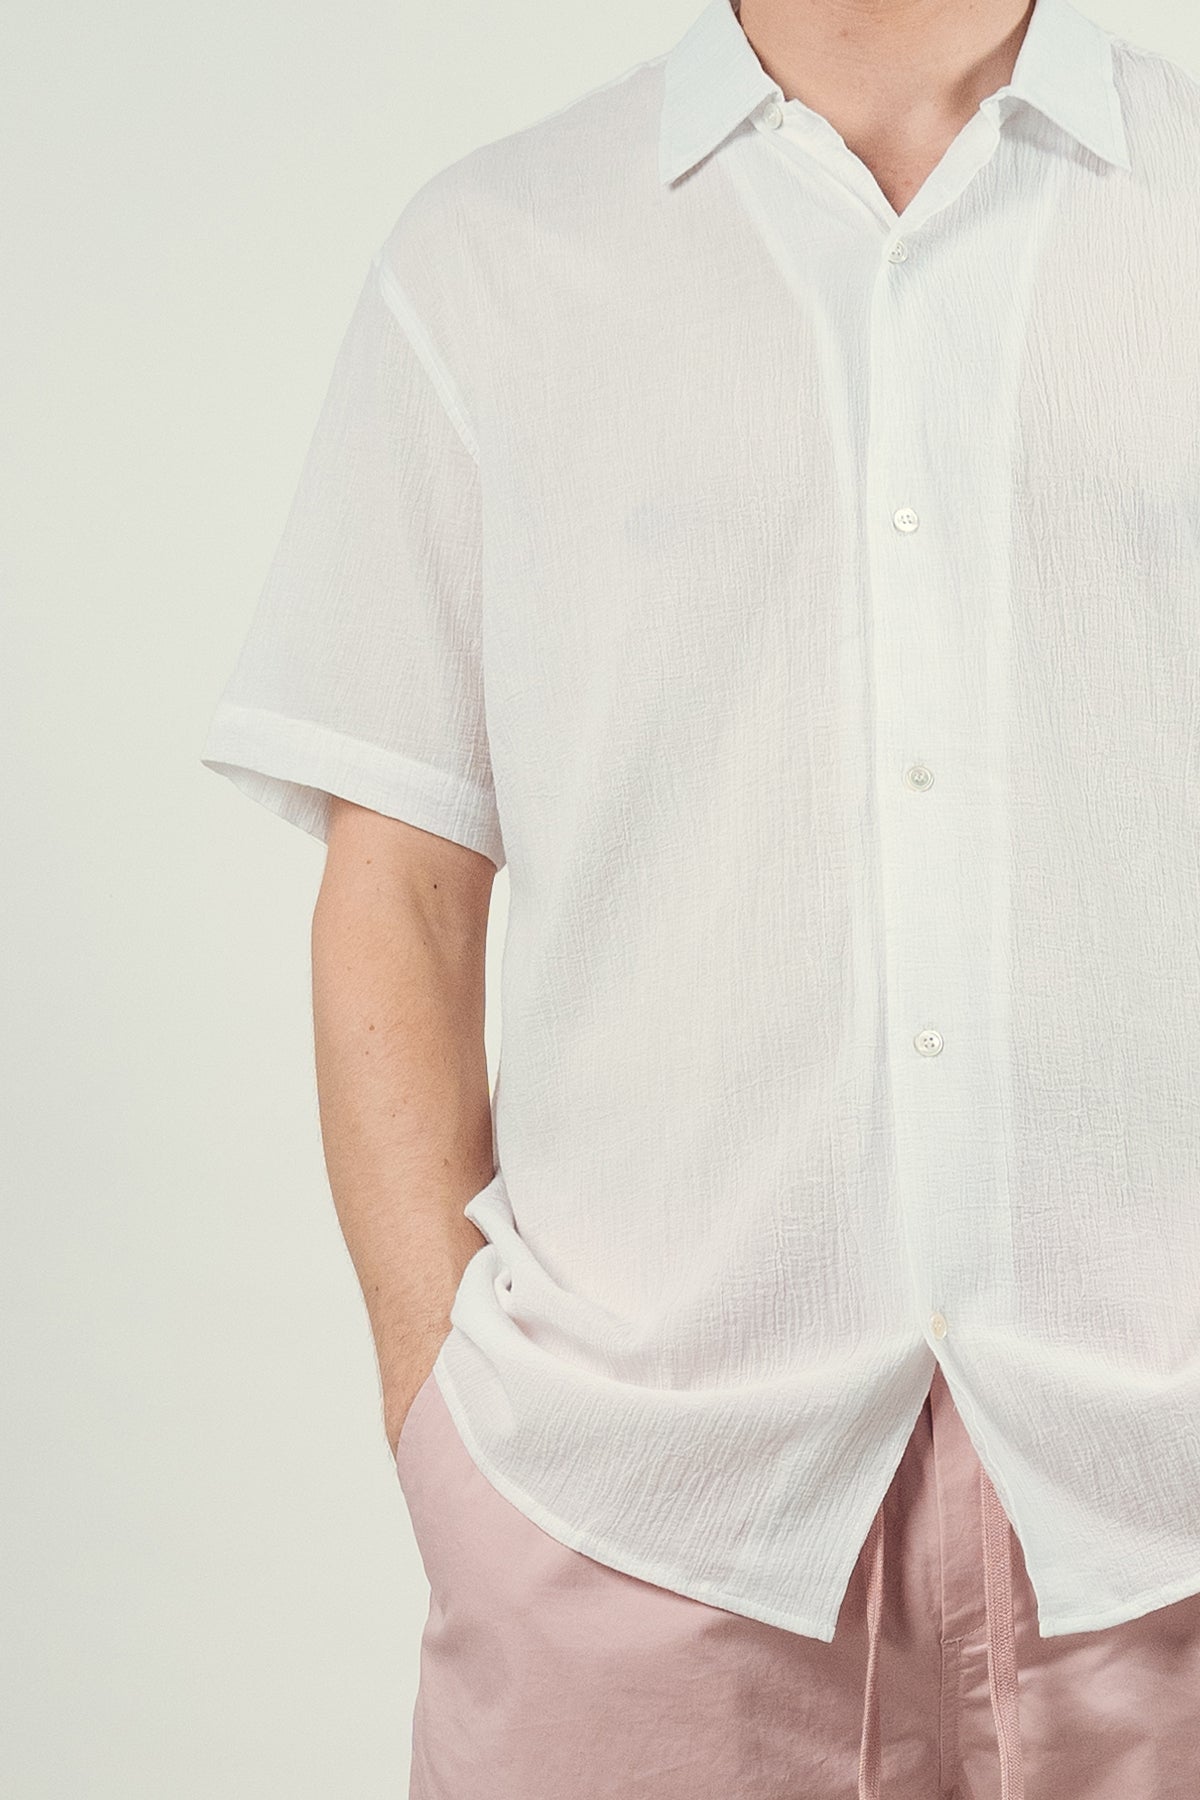 Kore Studios | Island S/S Shirt - White